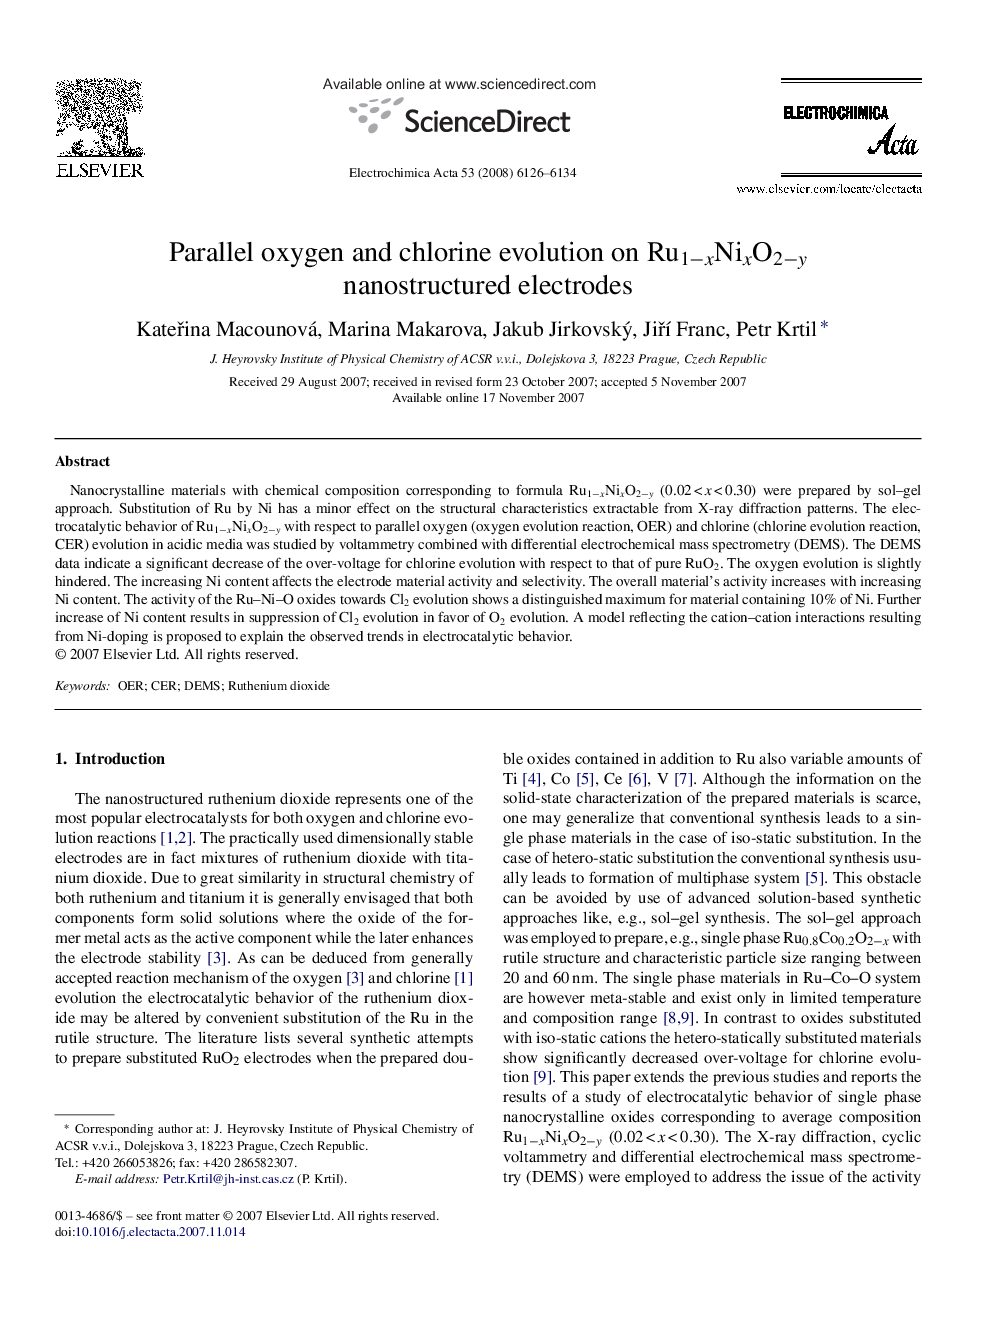 Parallel oxygen and chlorine evolution on Ru1−xNixO2−y nanostructured electrodes